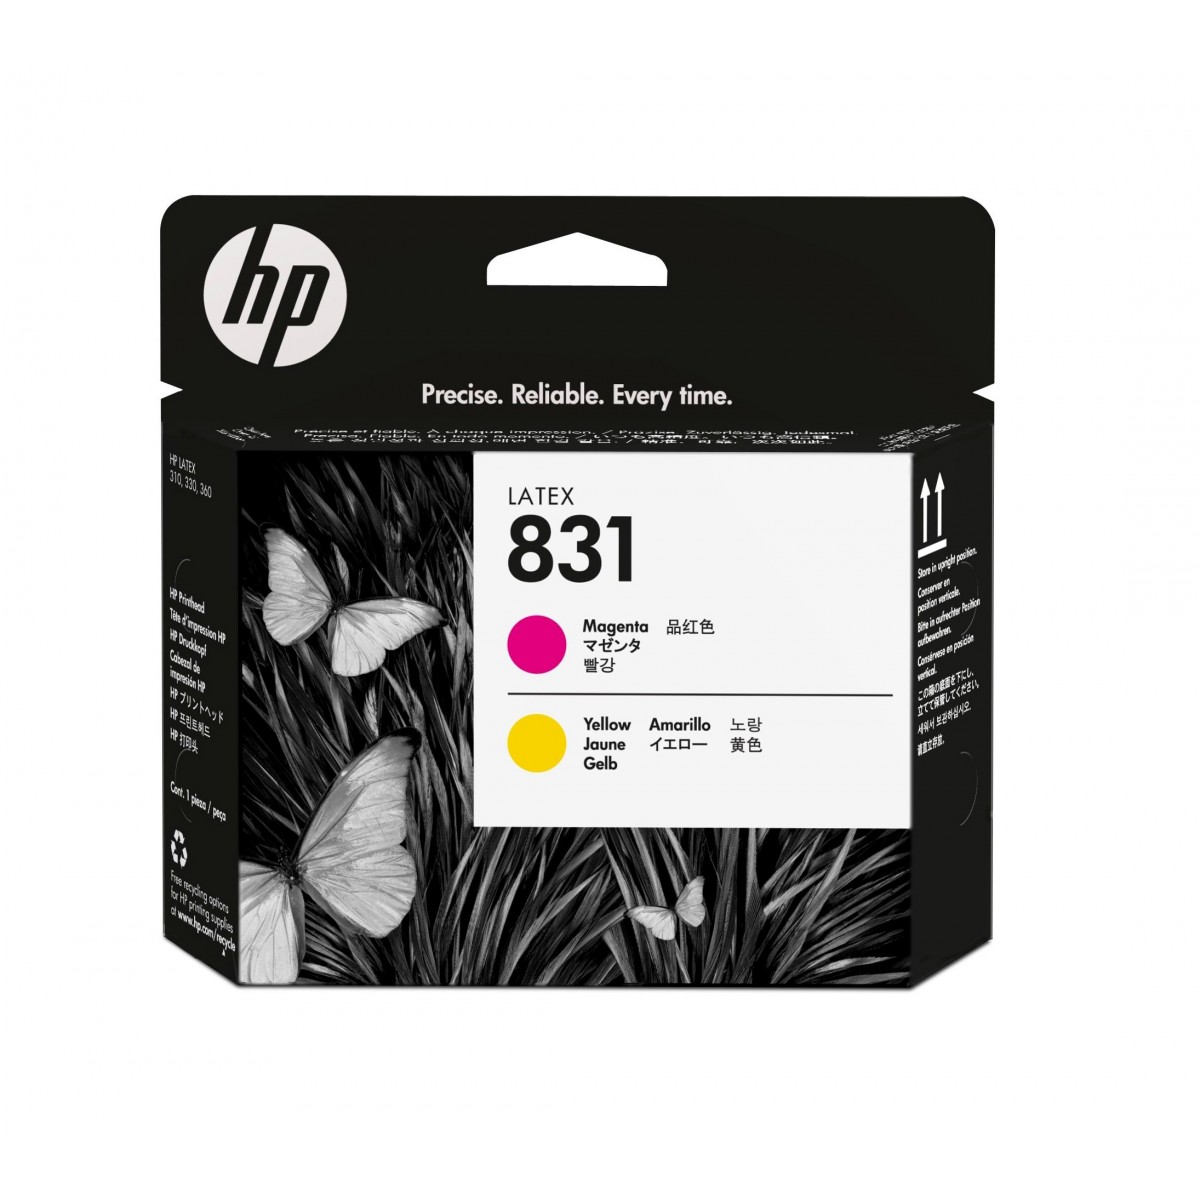 HP 831 Yellow/Magenta Latex Printhead - HP Latex 110 Printer - HP Latex 310 Printer - HP Latex 330 Printer - HP Latex 360 Printe